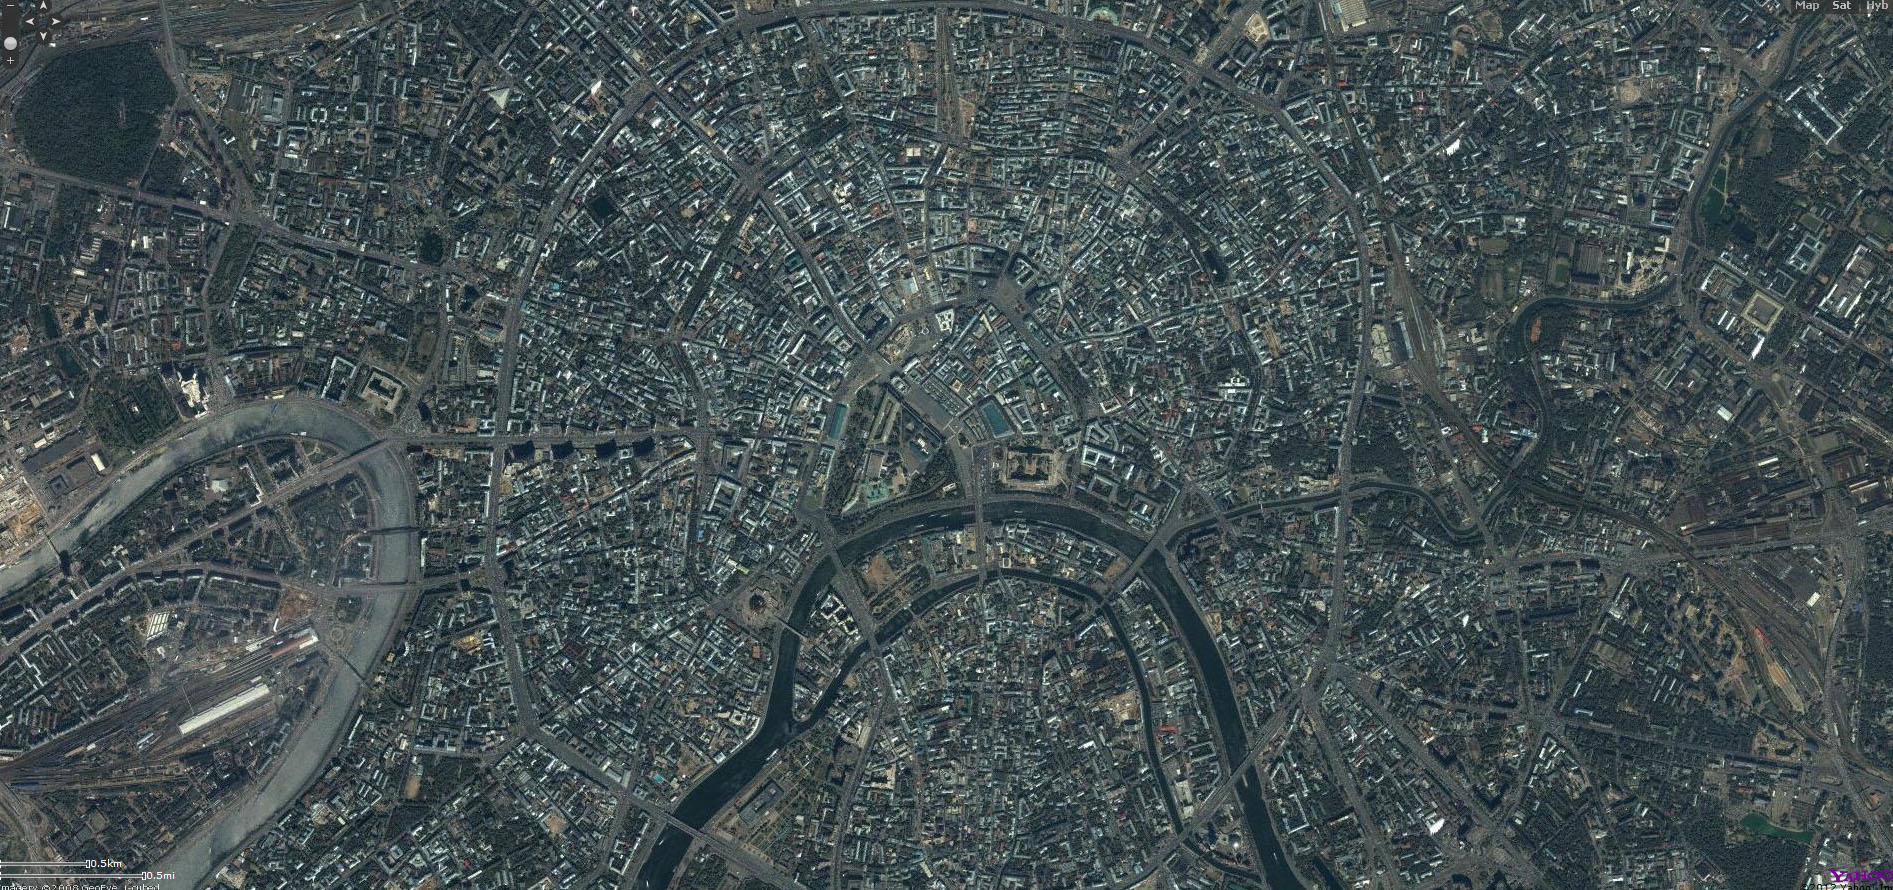 Спутниковая карта Москвы